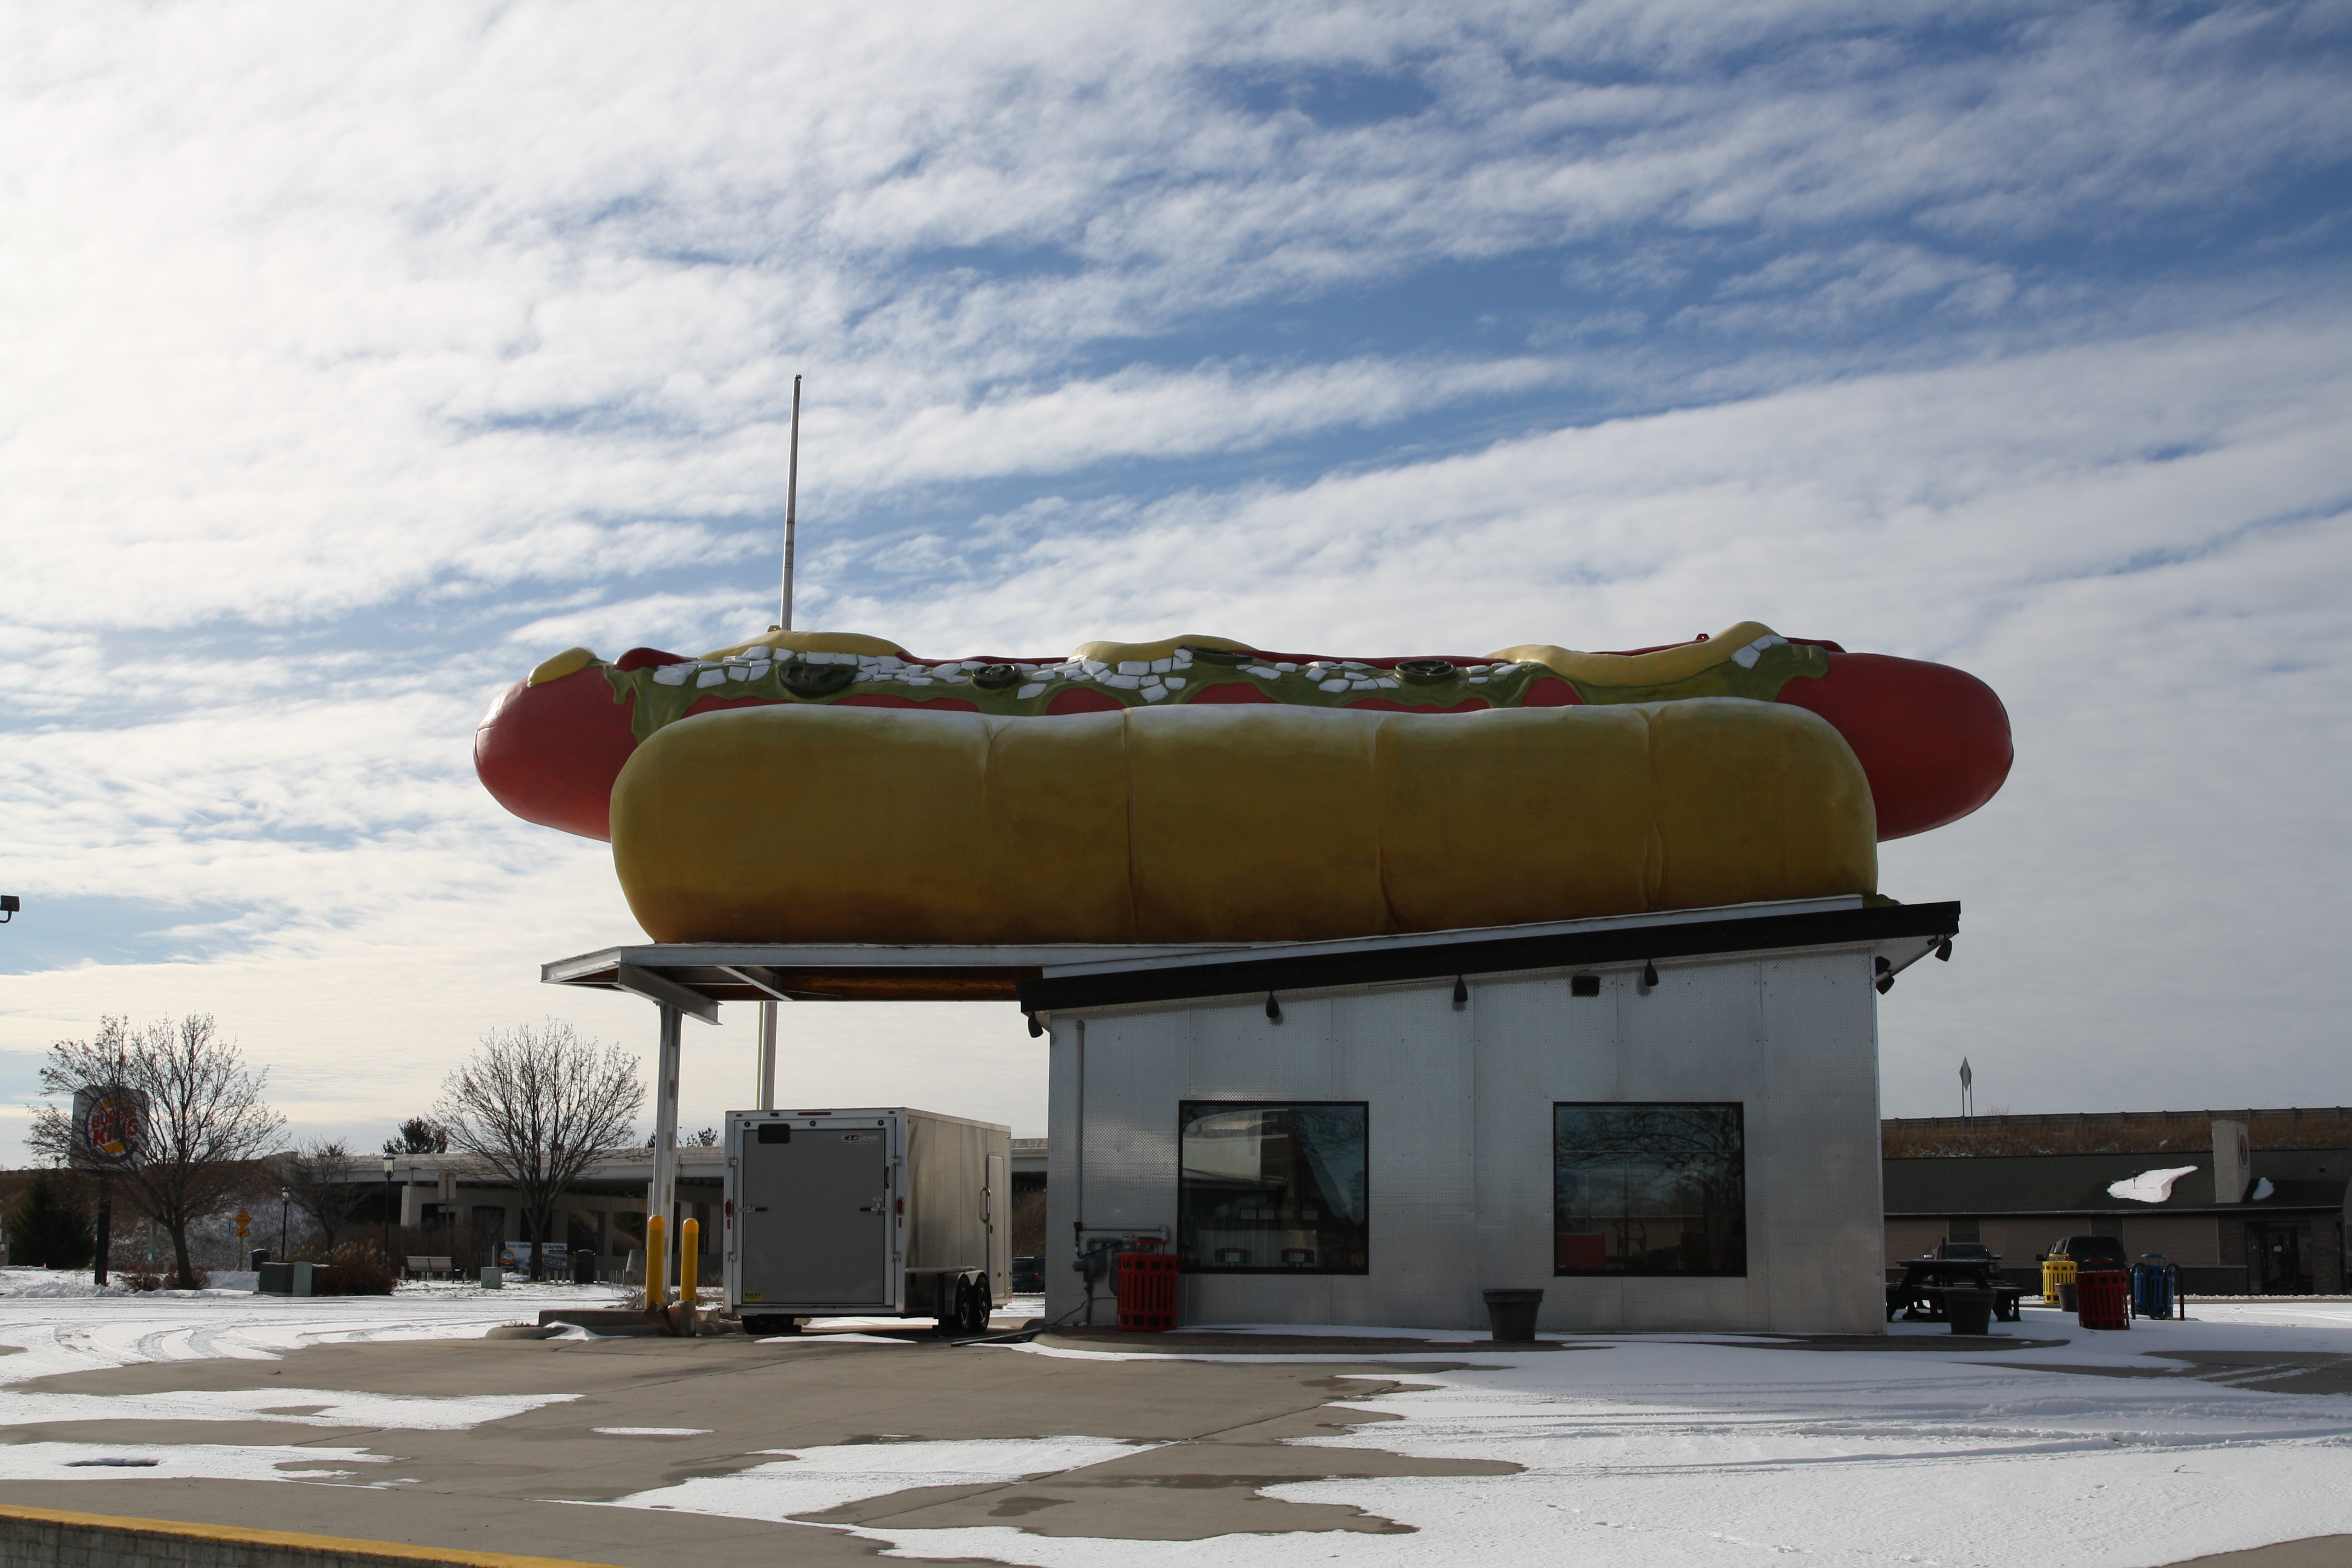 Giant hot dog Michigan UP Mackinac Bridge.